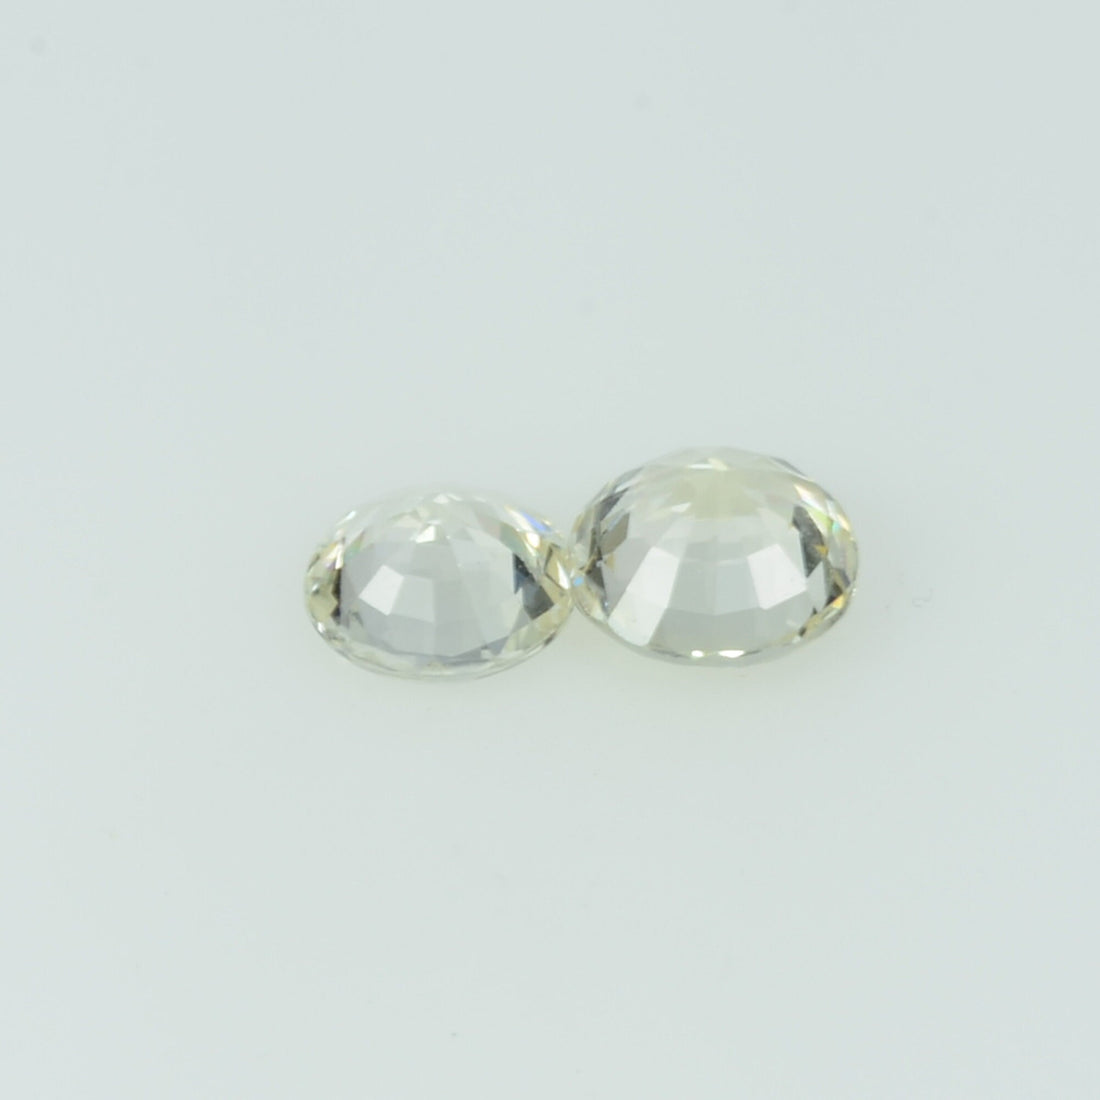 5.0 mm Natural White Sapphire Loose Gemstone Round Cut